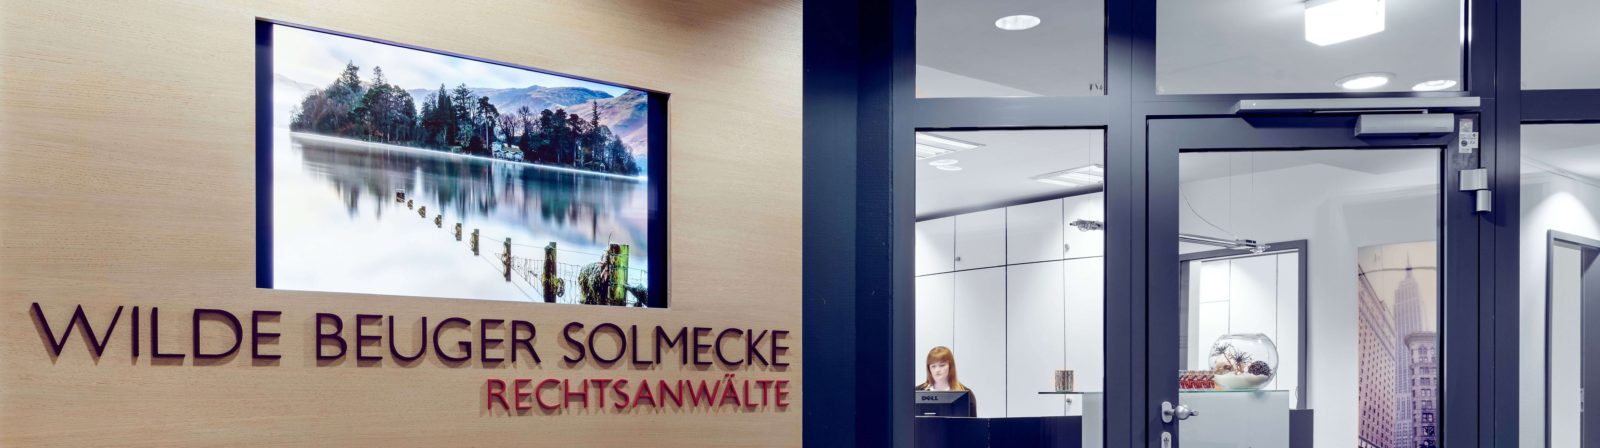 Foyer der Rechtsanwaltskanzlei WILDE BEUGER SOLMECKE